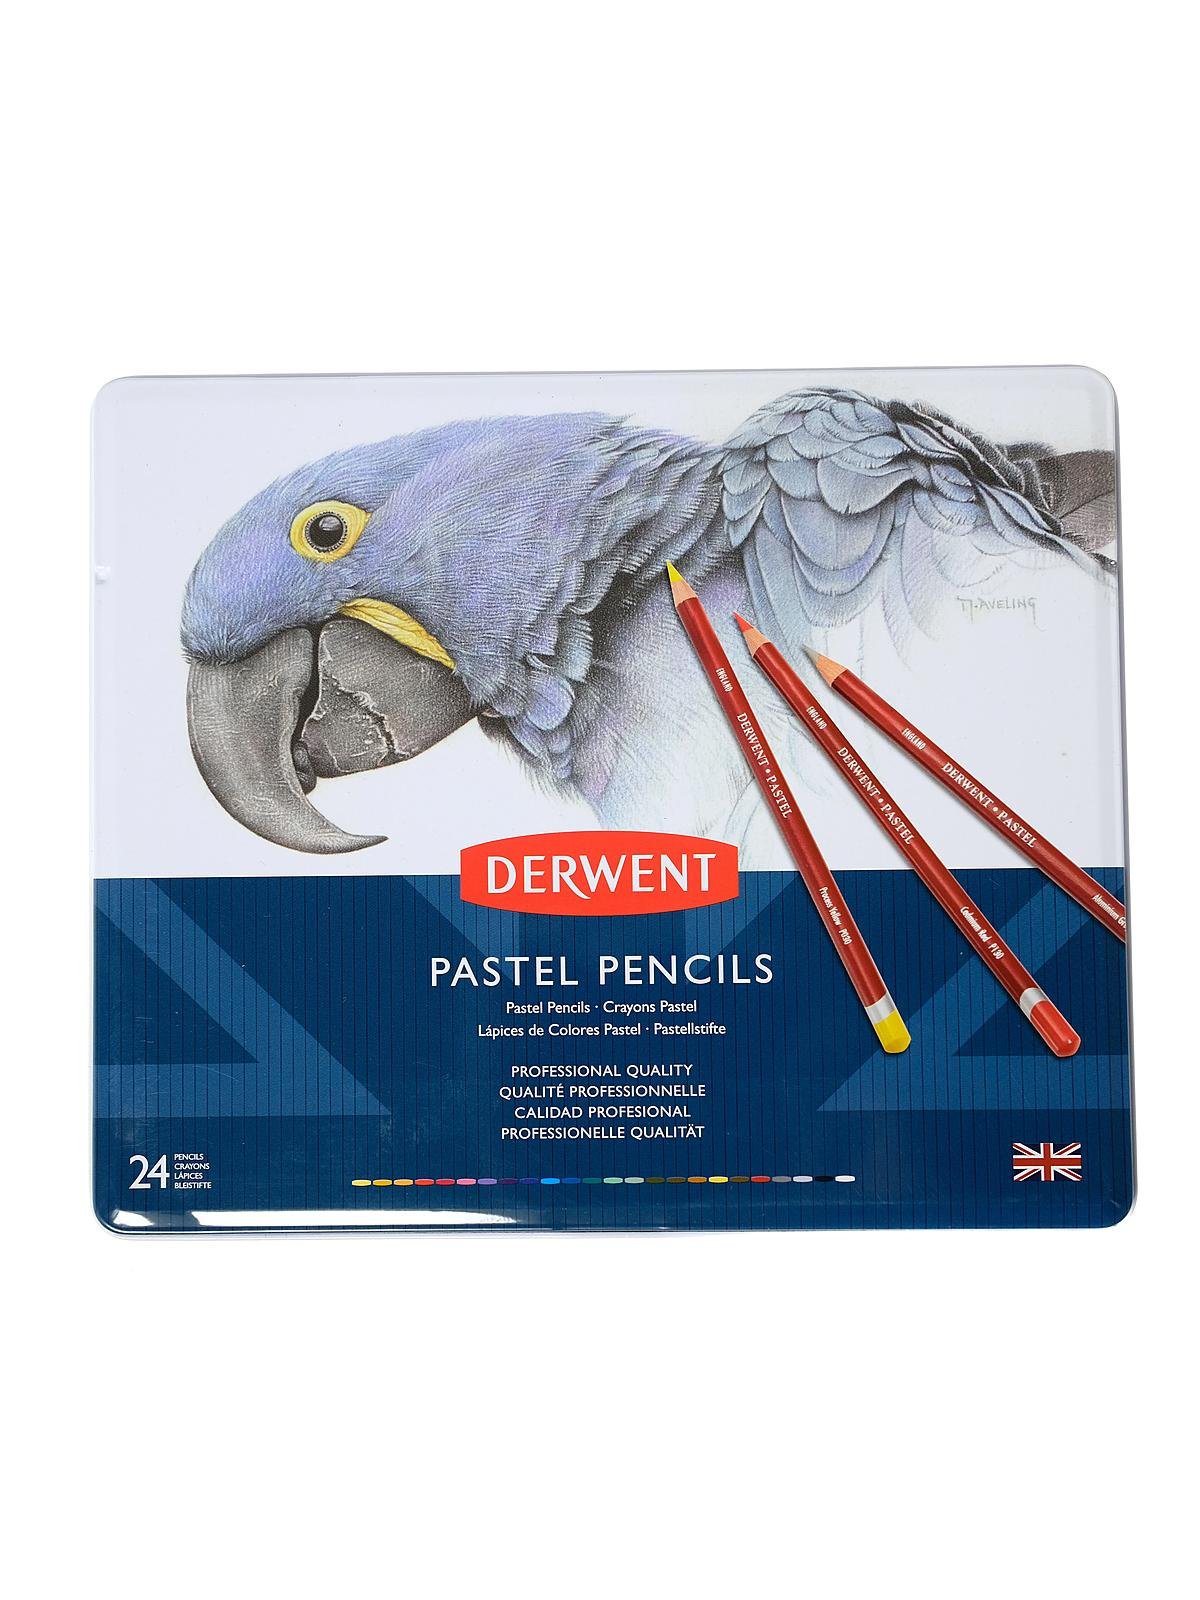 Derwent Pastel Pencil-24 Set Tin